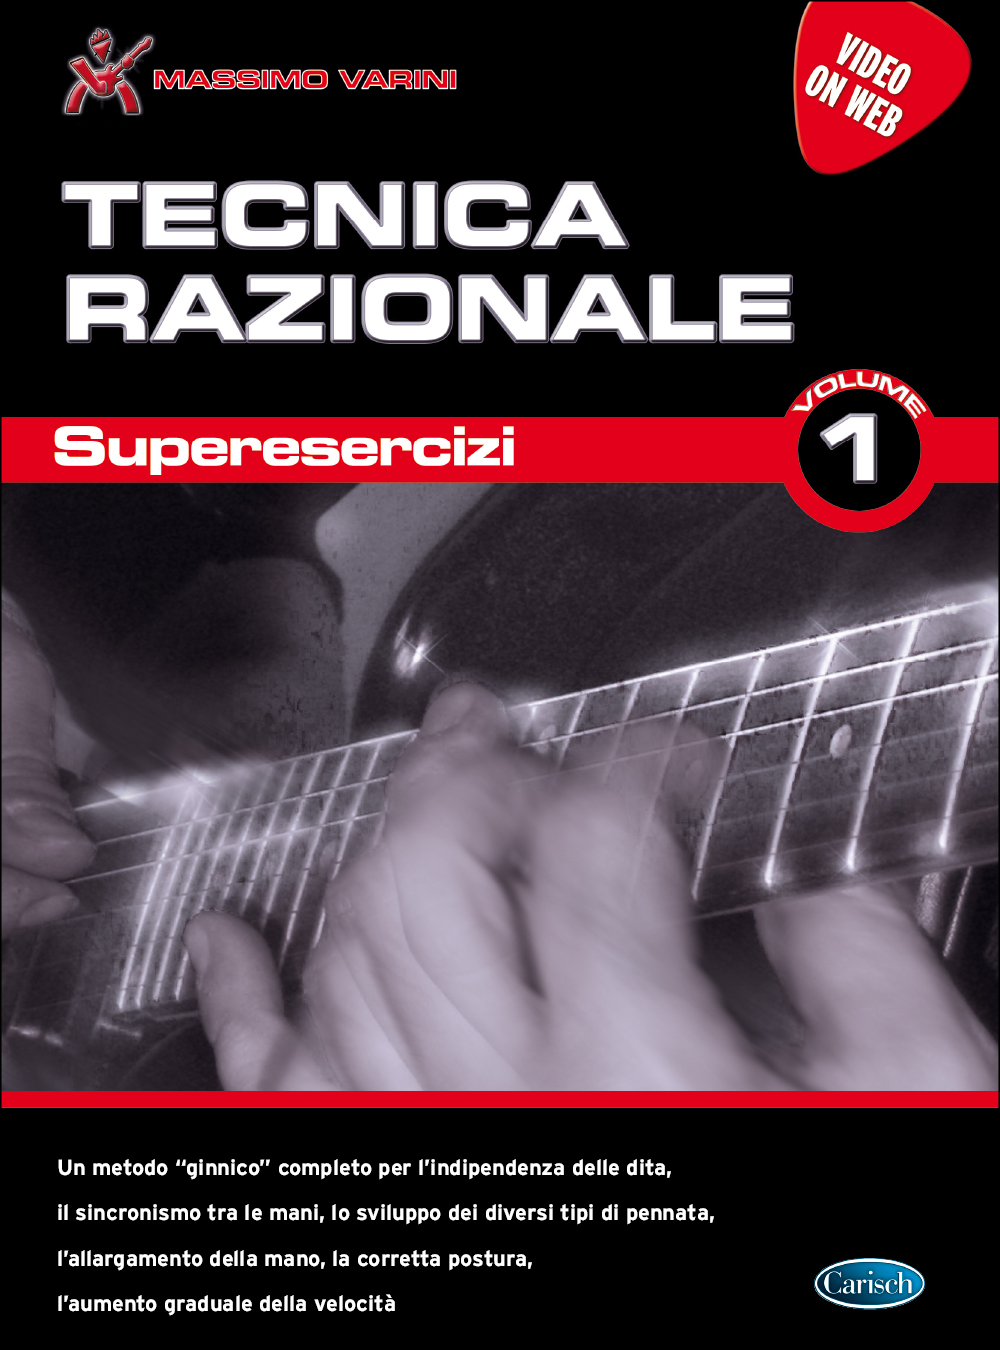 Massimo Varini: Tecnica Razionale Video On Web Edition: Instrumental Tutor